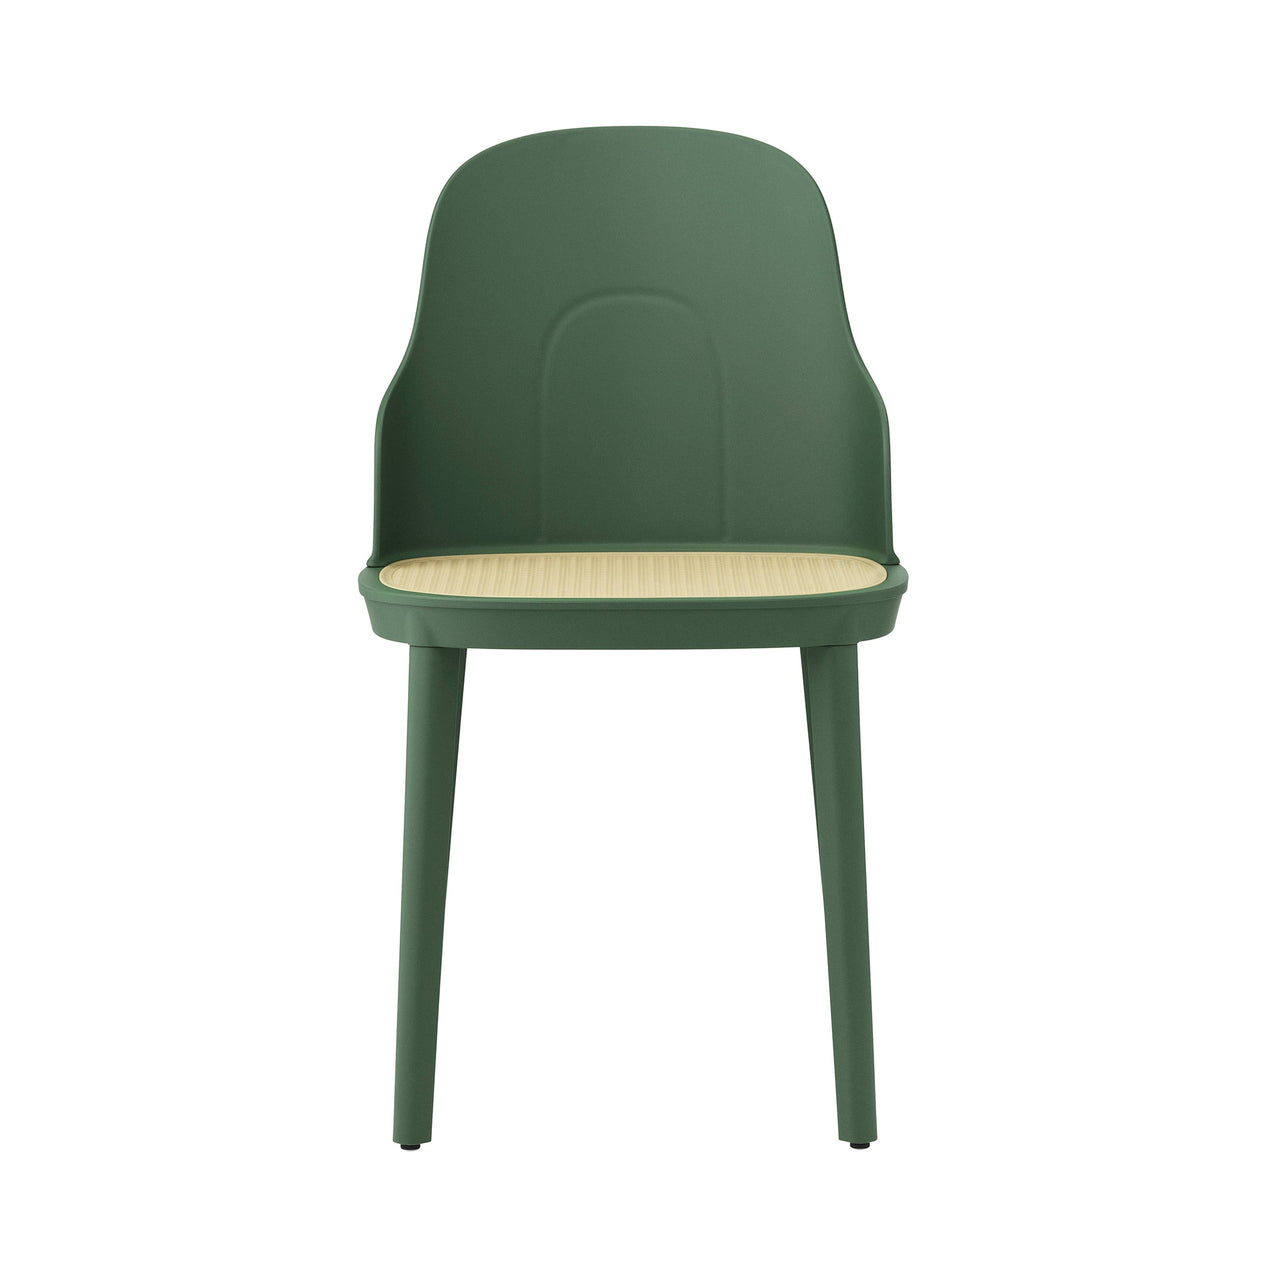 Allez Chair: Molded Wicker + Park Green + Polypropylene